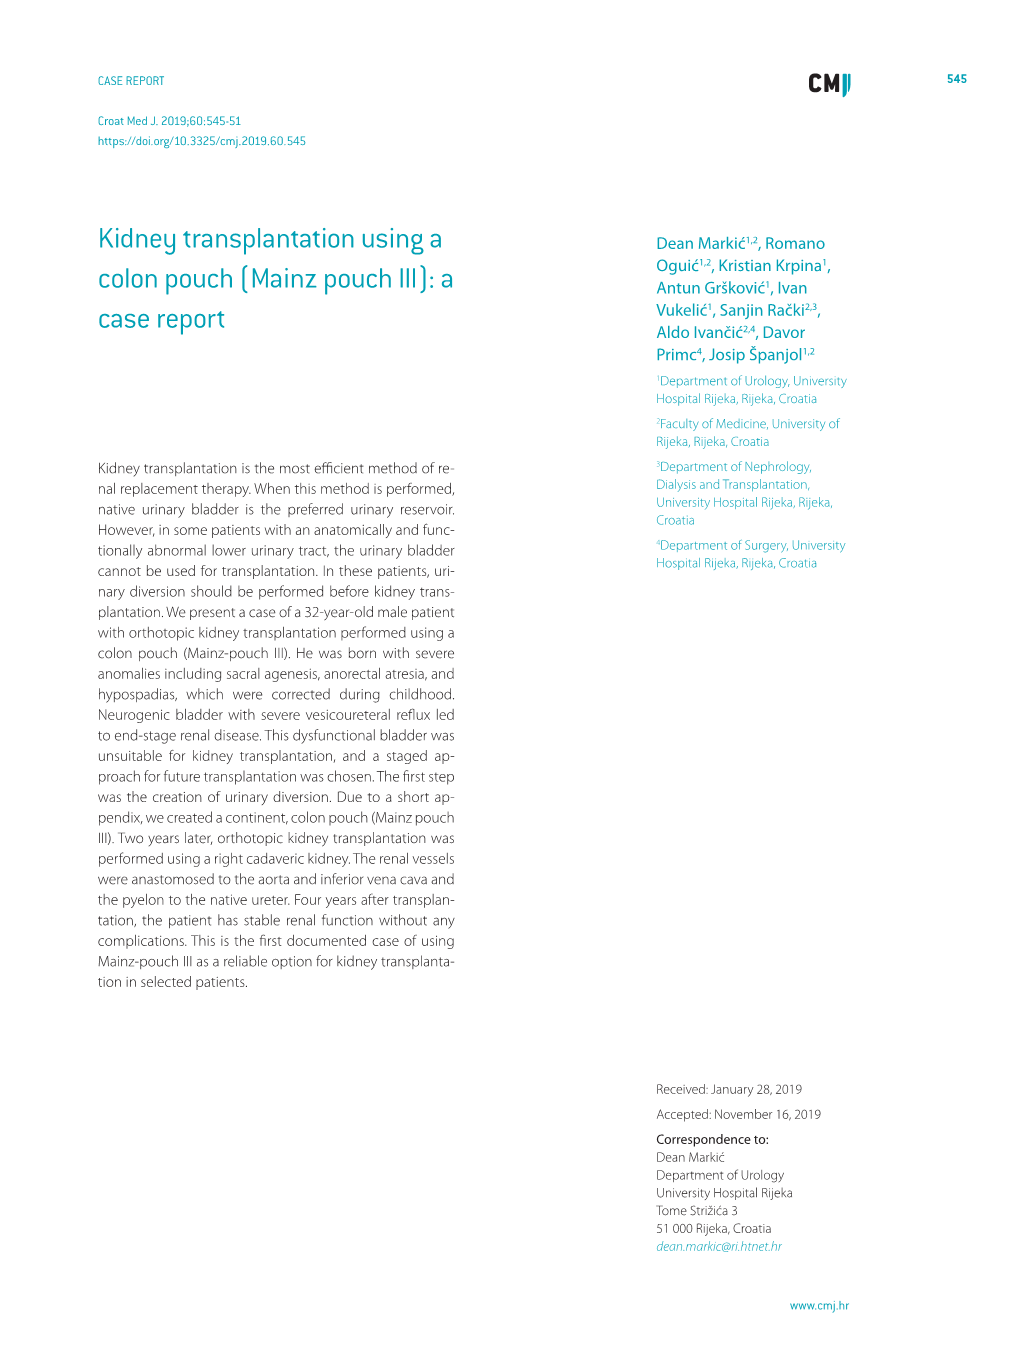 Kidney Transplantation Using a Colon Pouch